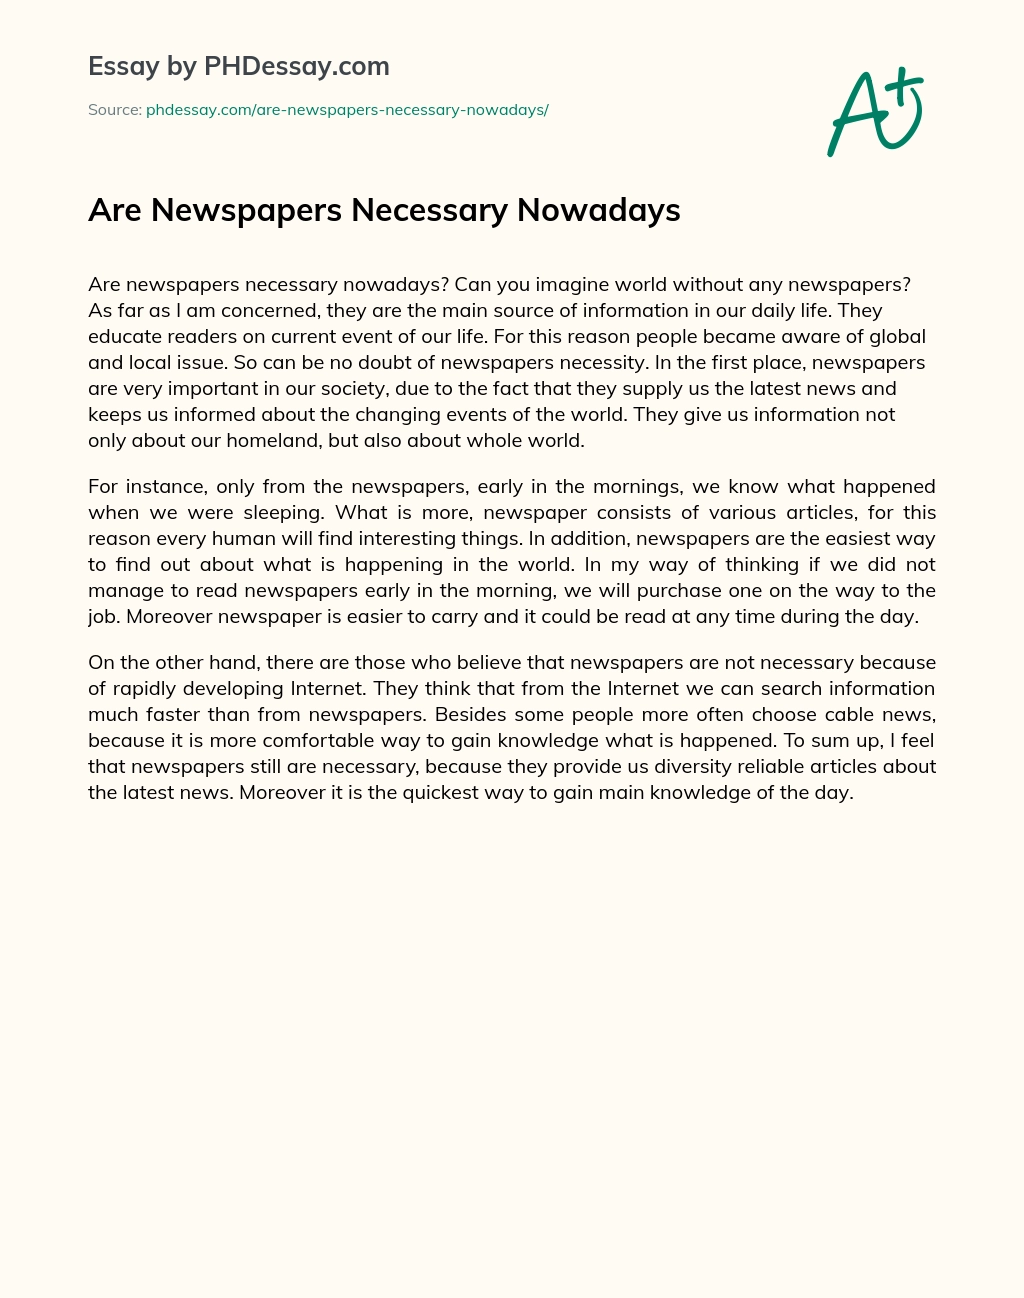 Are Newspapers Necessary Nowadays essay